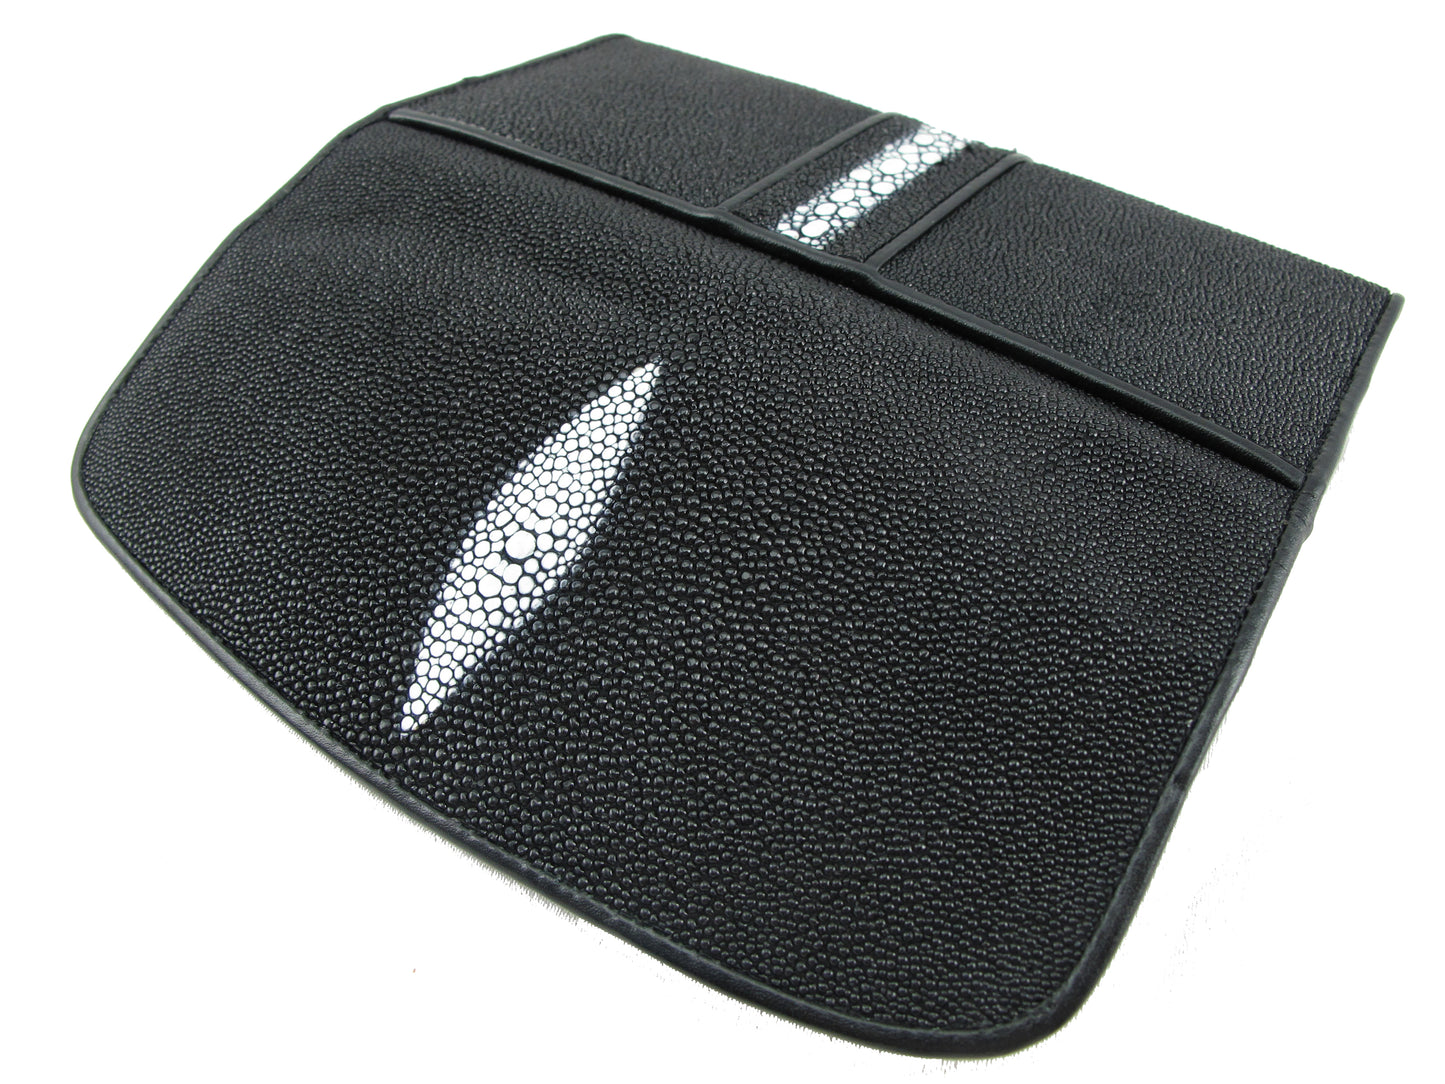 Genuine Row Stingray Skin Leather Women's Trifold Clutch Wallet Purse